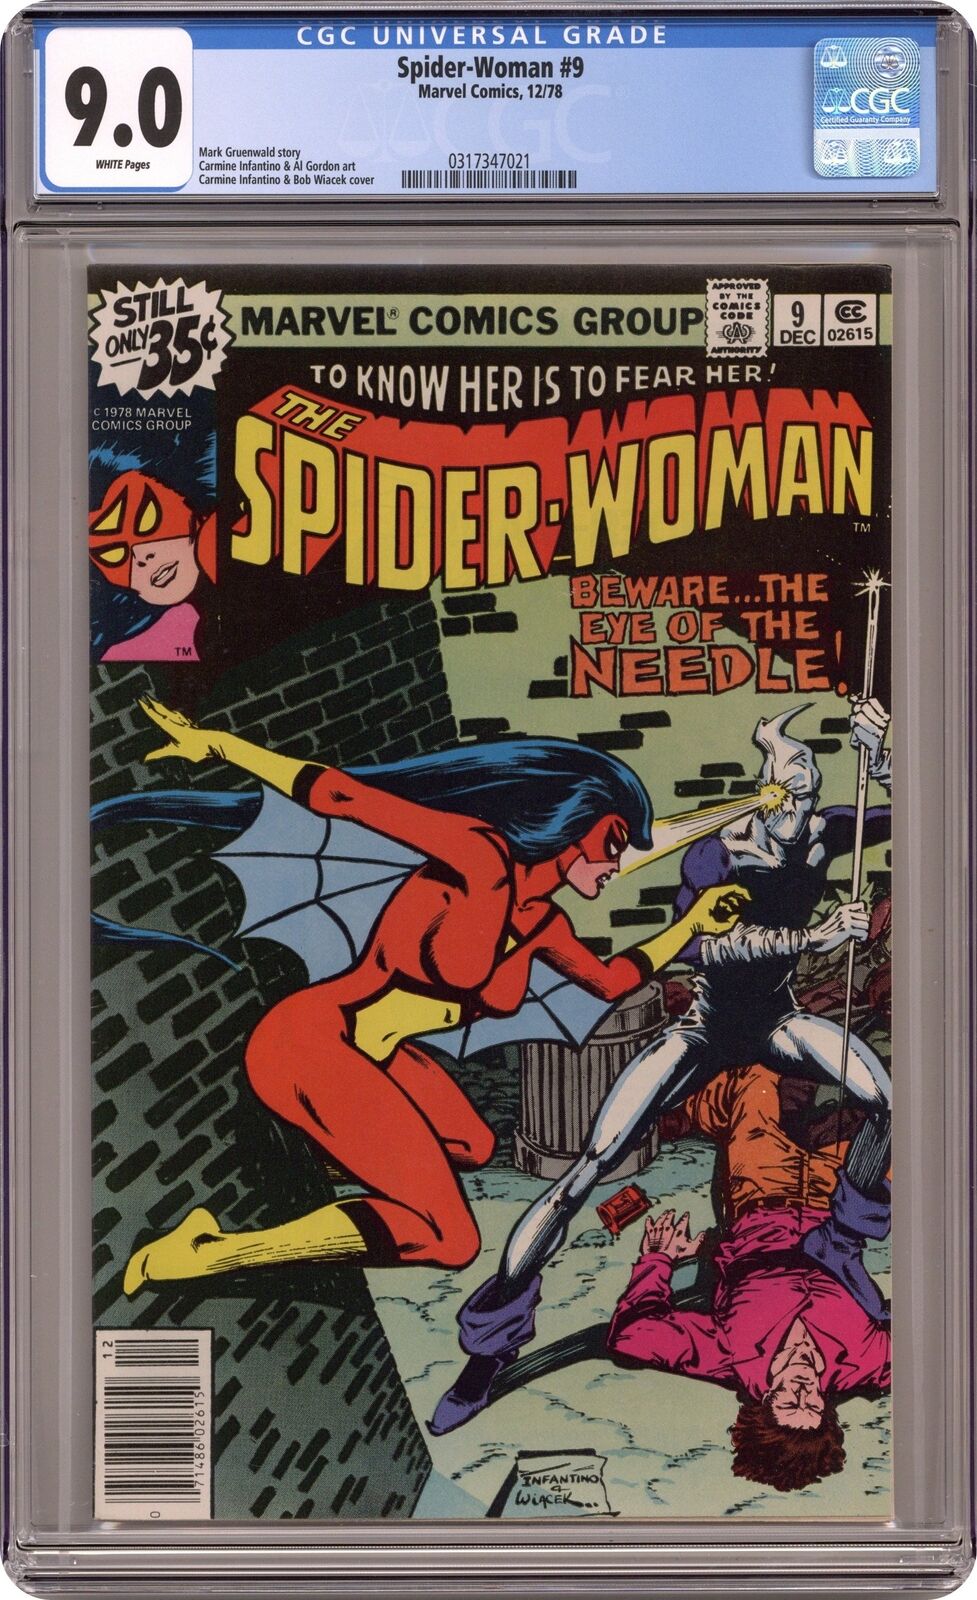 Spider-Woman #9 CGC 9.0 1978 0317347021